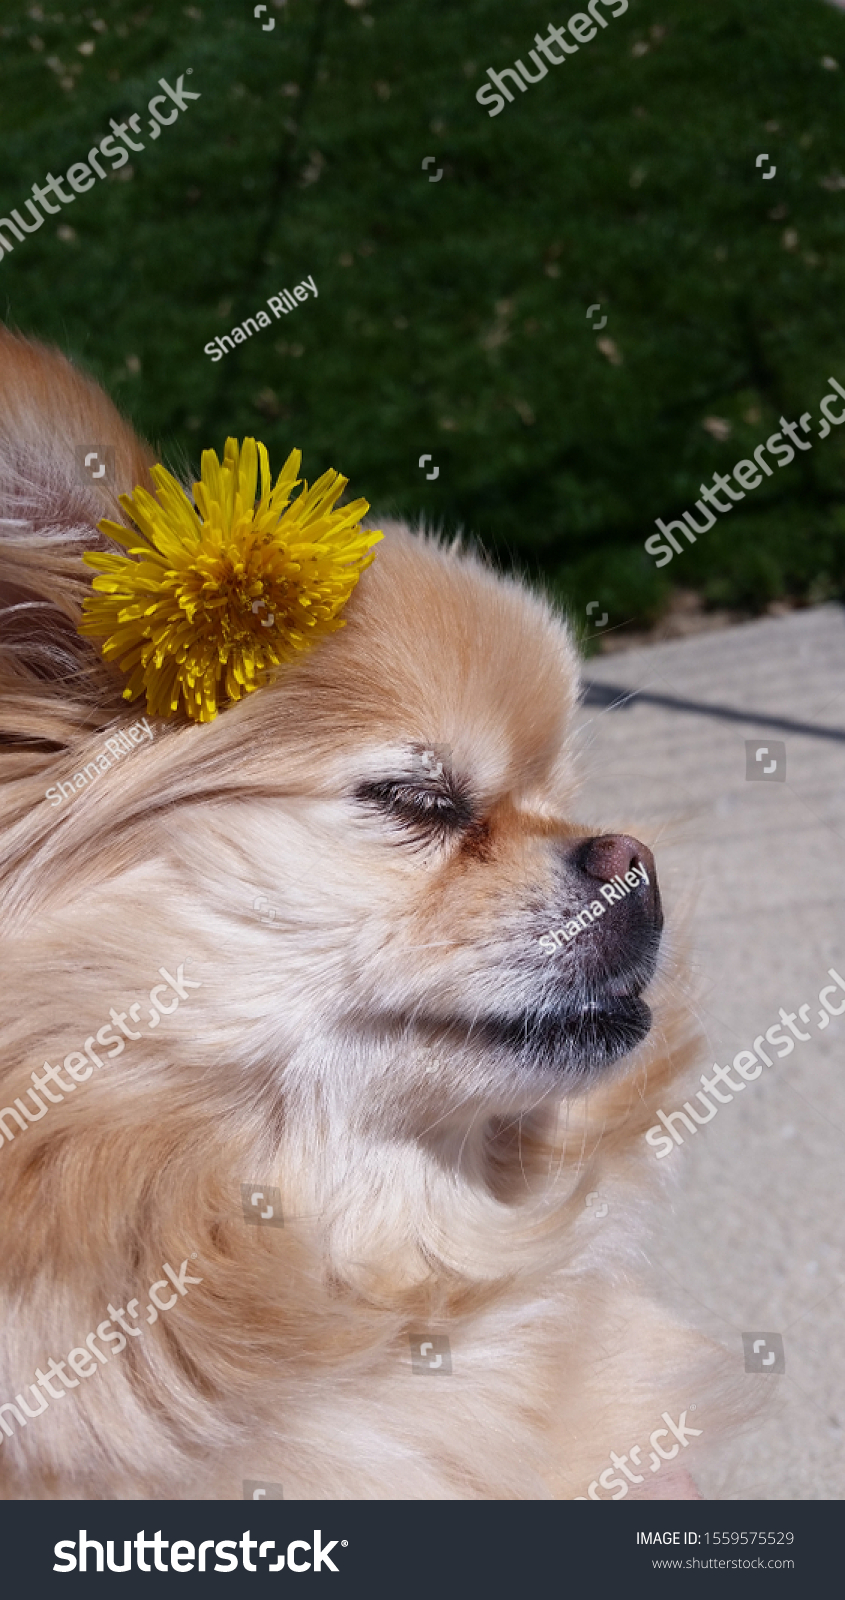 can i give my dog dandelion